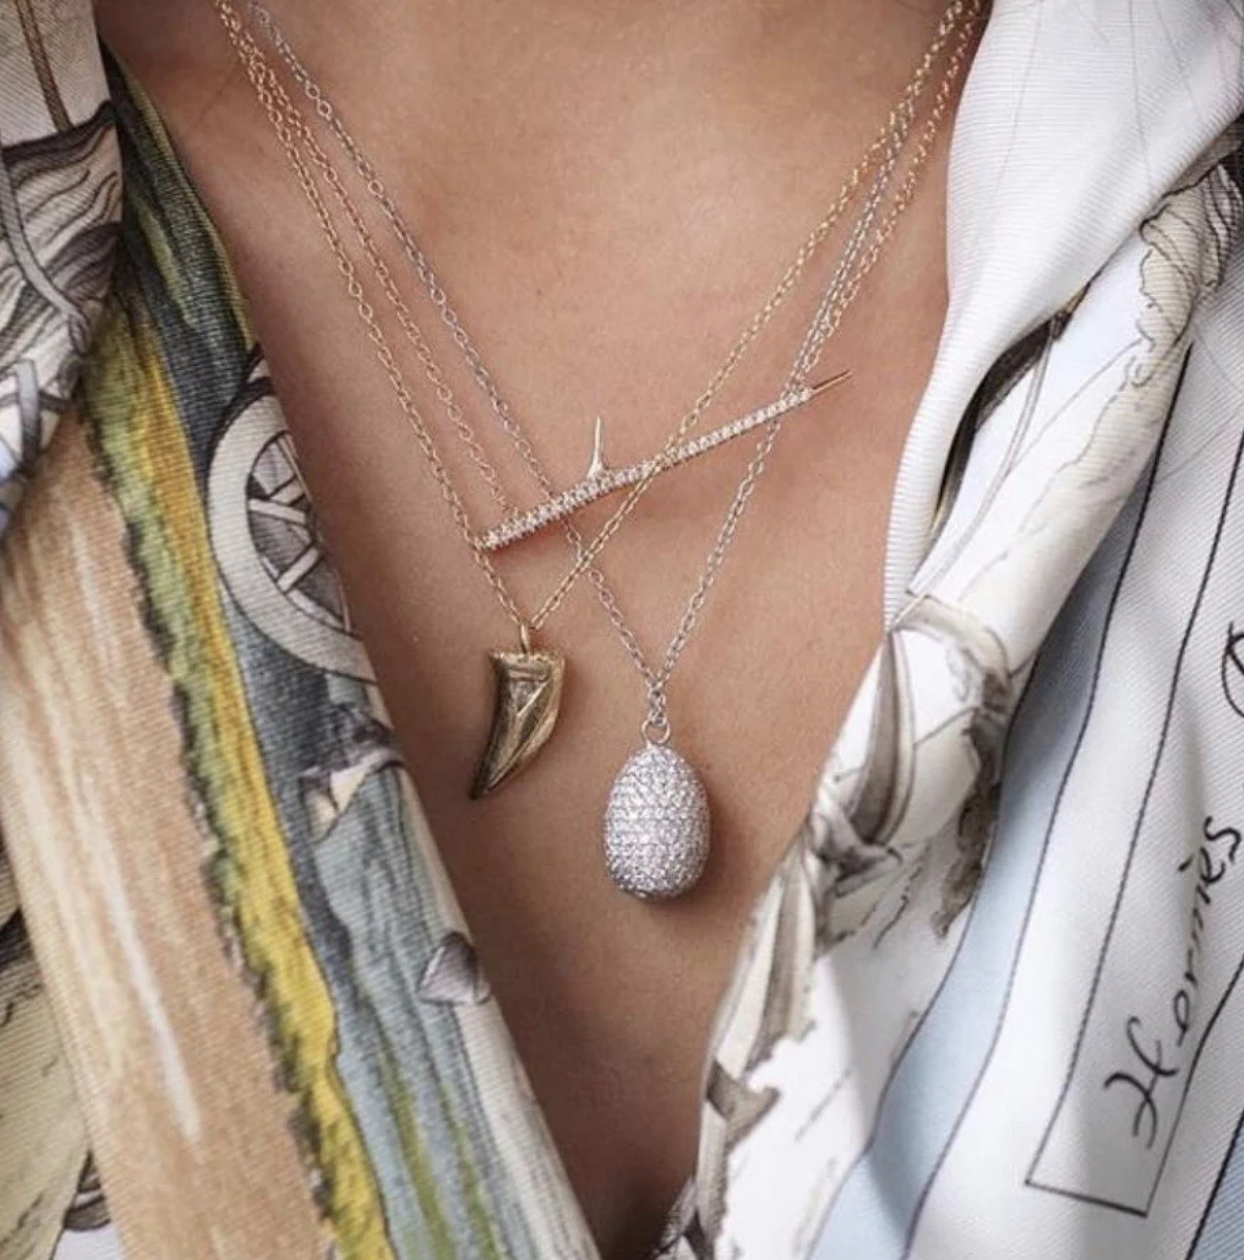 Pave Birds Egg Necklace Pendant Elisabeth Bell Jewelry   